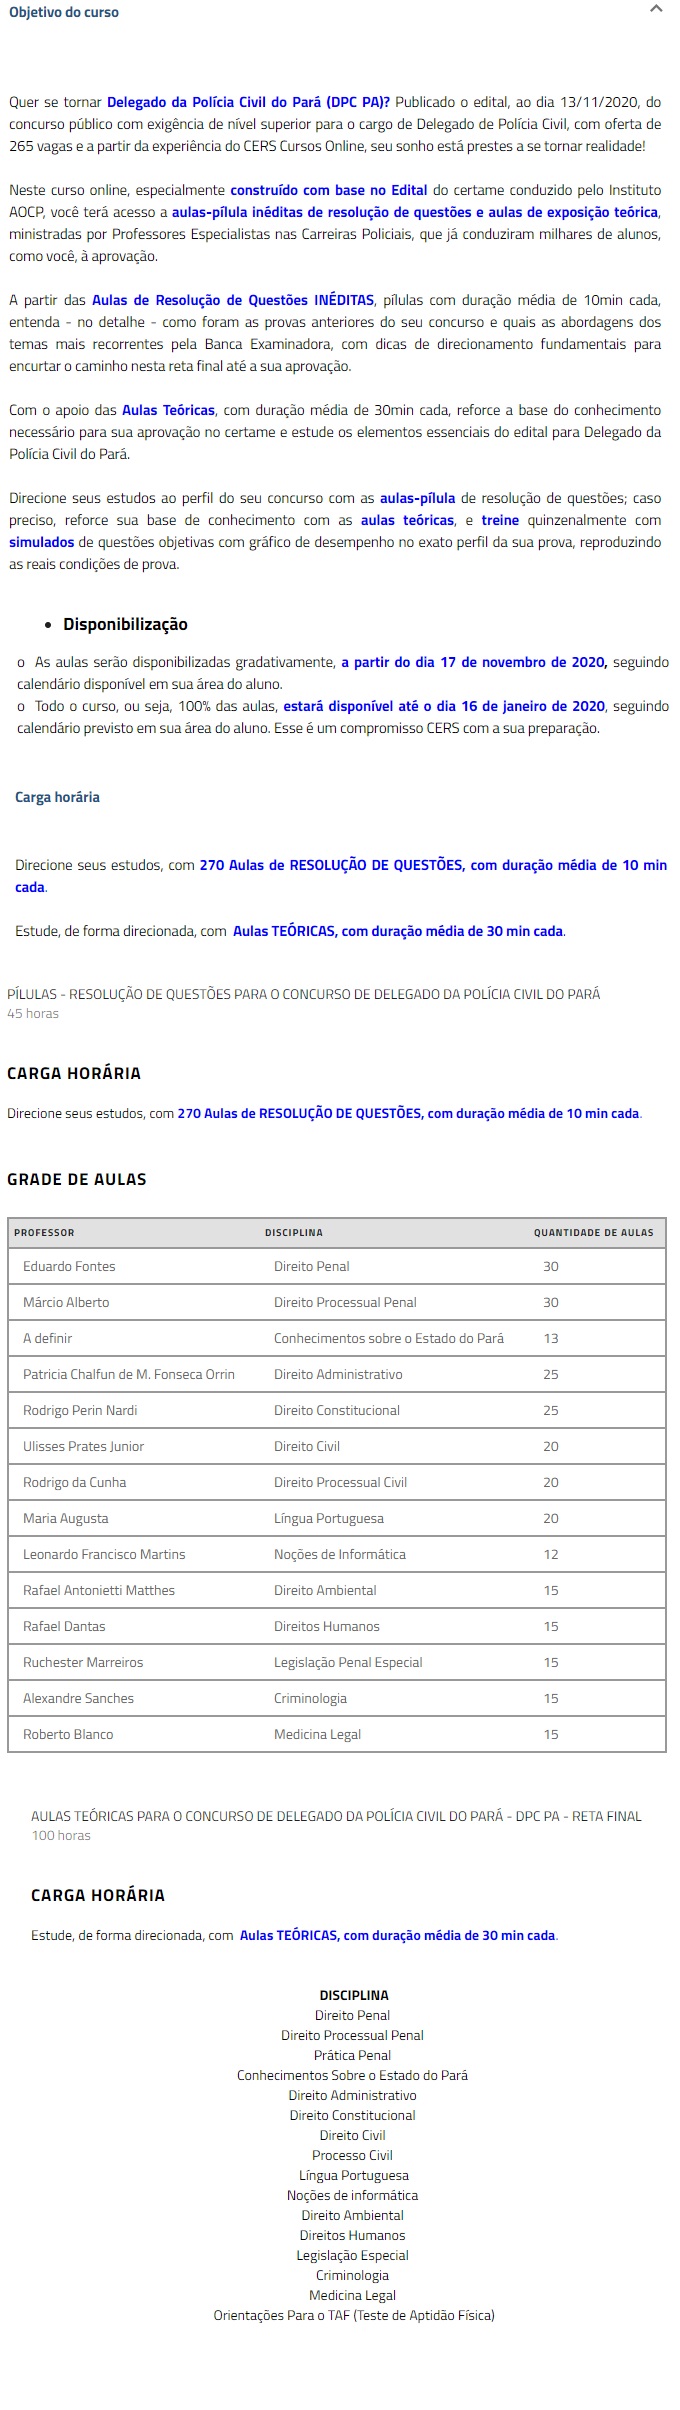 PC PA - Delegado - RETA FINAL (CERS 2020.2)Polícia Civil do Pará 4